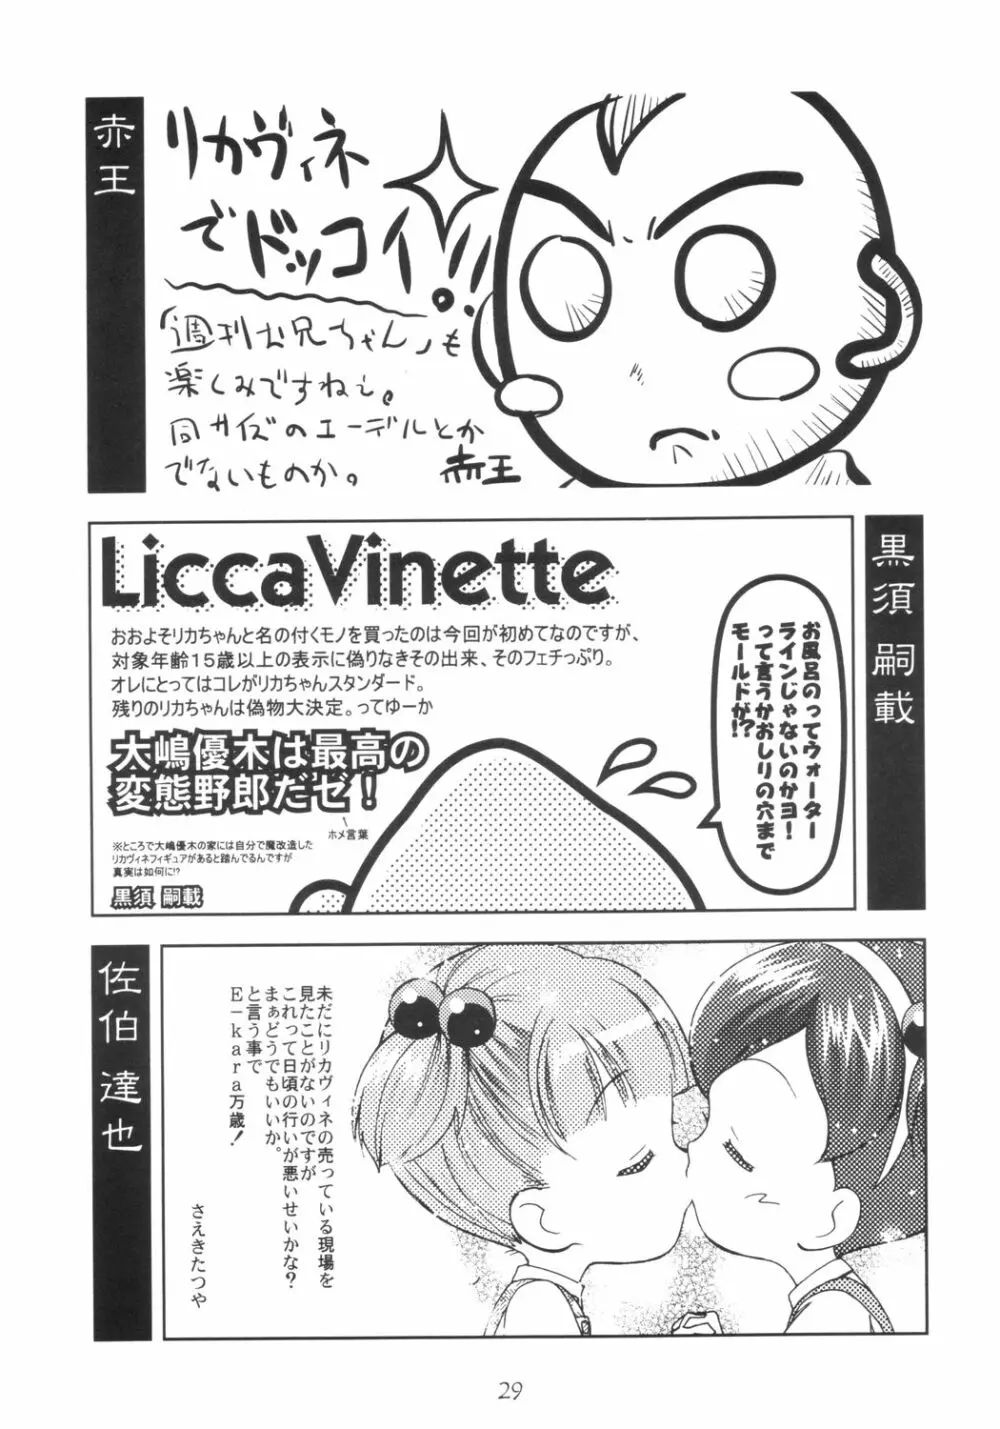 Licca Vignette 28ページ